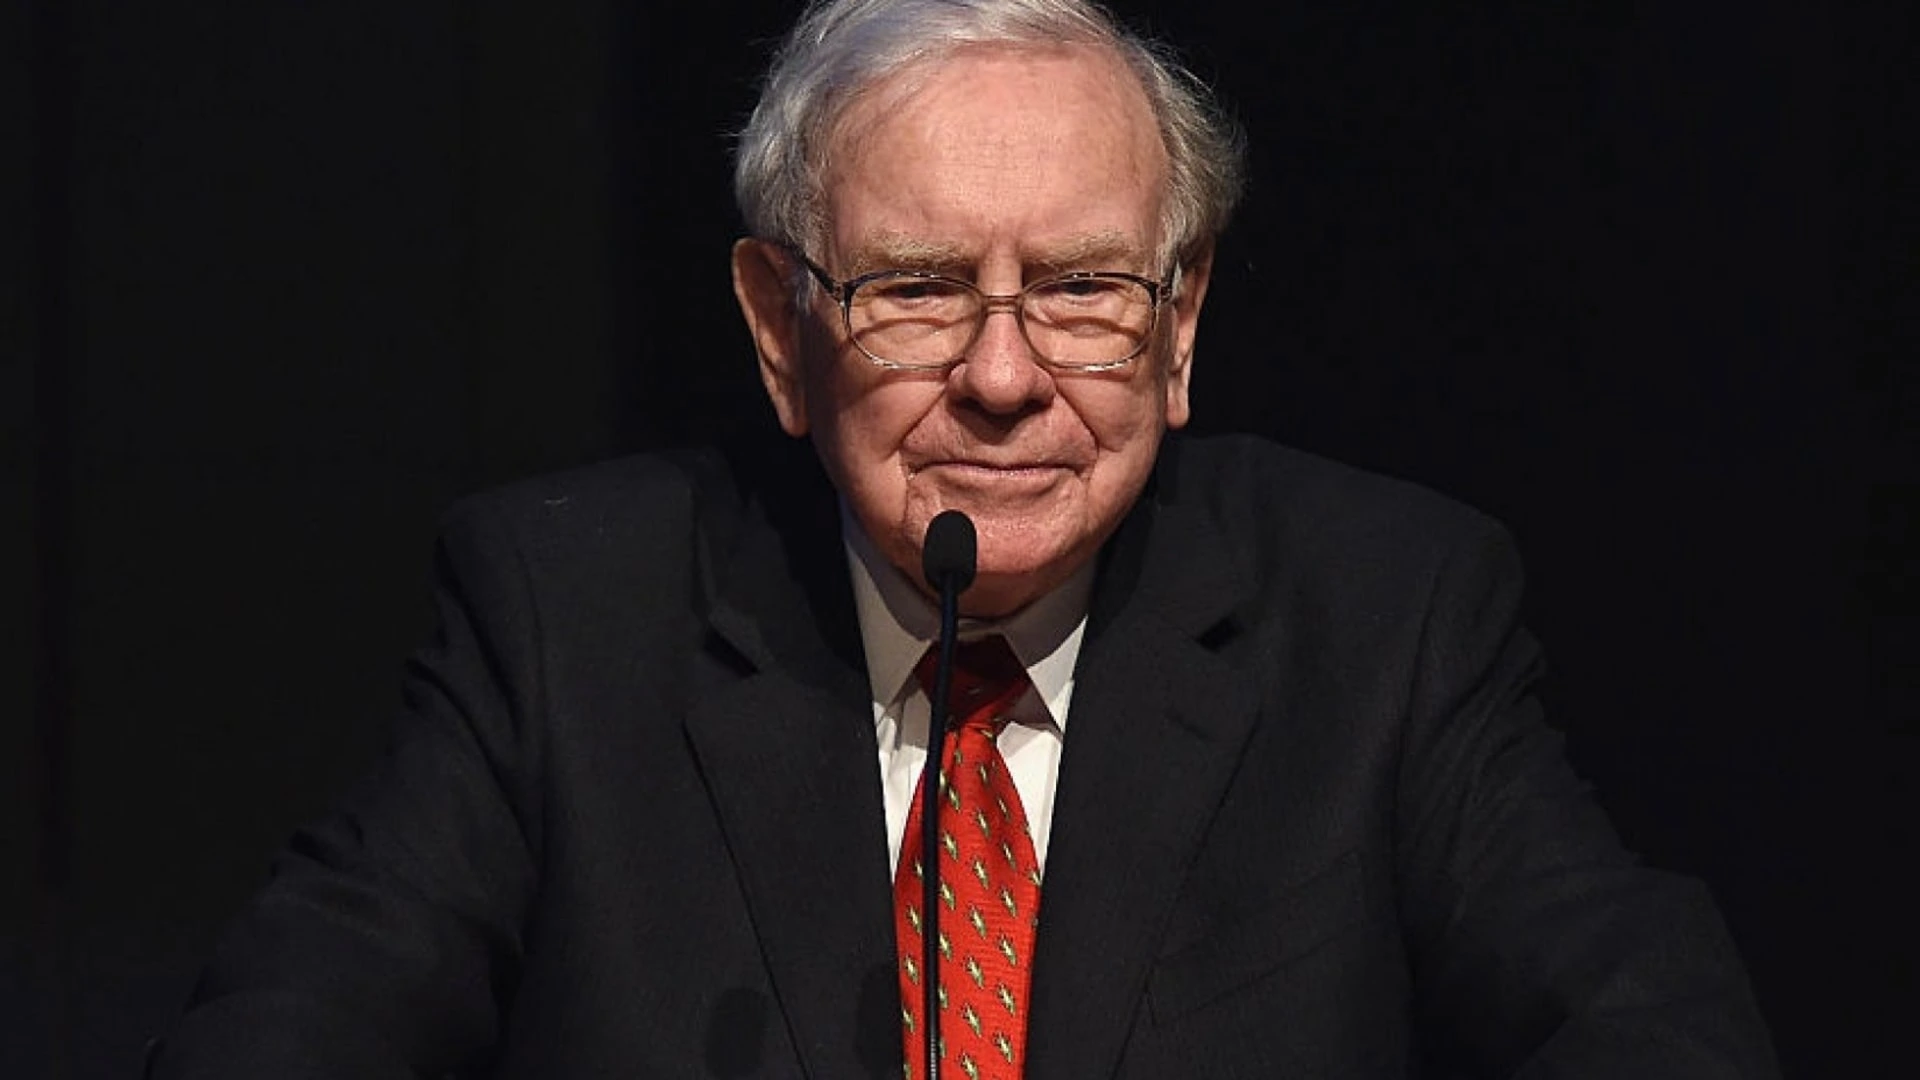 Warren Buffett - the chairman of the holding company Berkshire Hathaway
source https://www.inc.com/bill-murphy-jr/37-years-ago-warren-buffett-explained-a-brutal-truth-that-most-people-never-learn.html